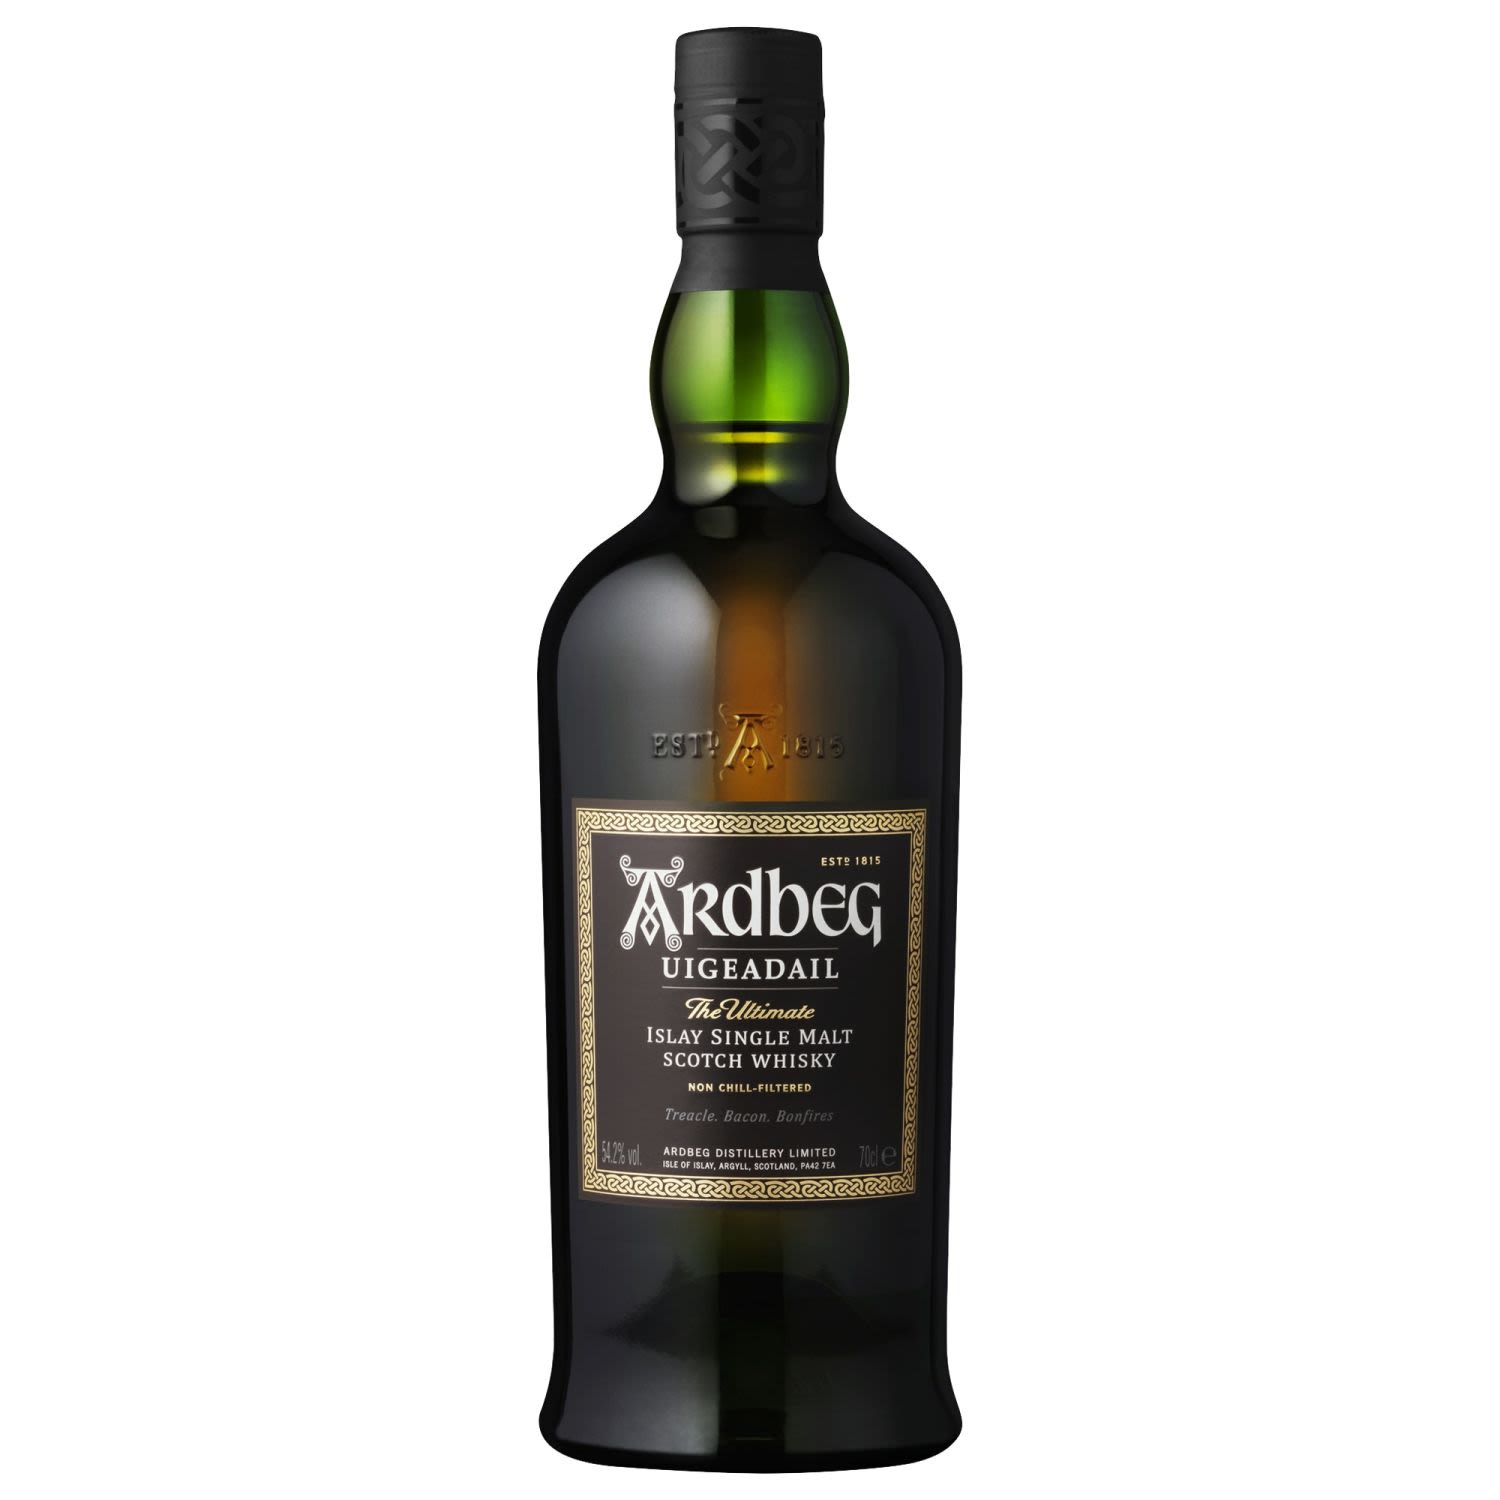 Ardbeg Uigeadail Scotch Whisky 700mL Bottle